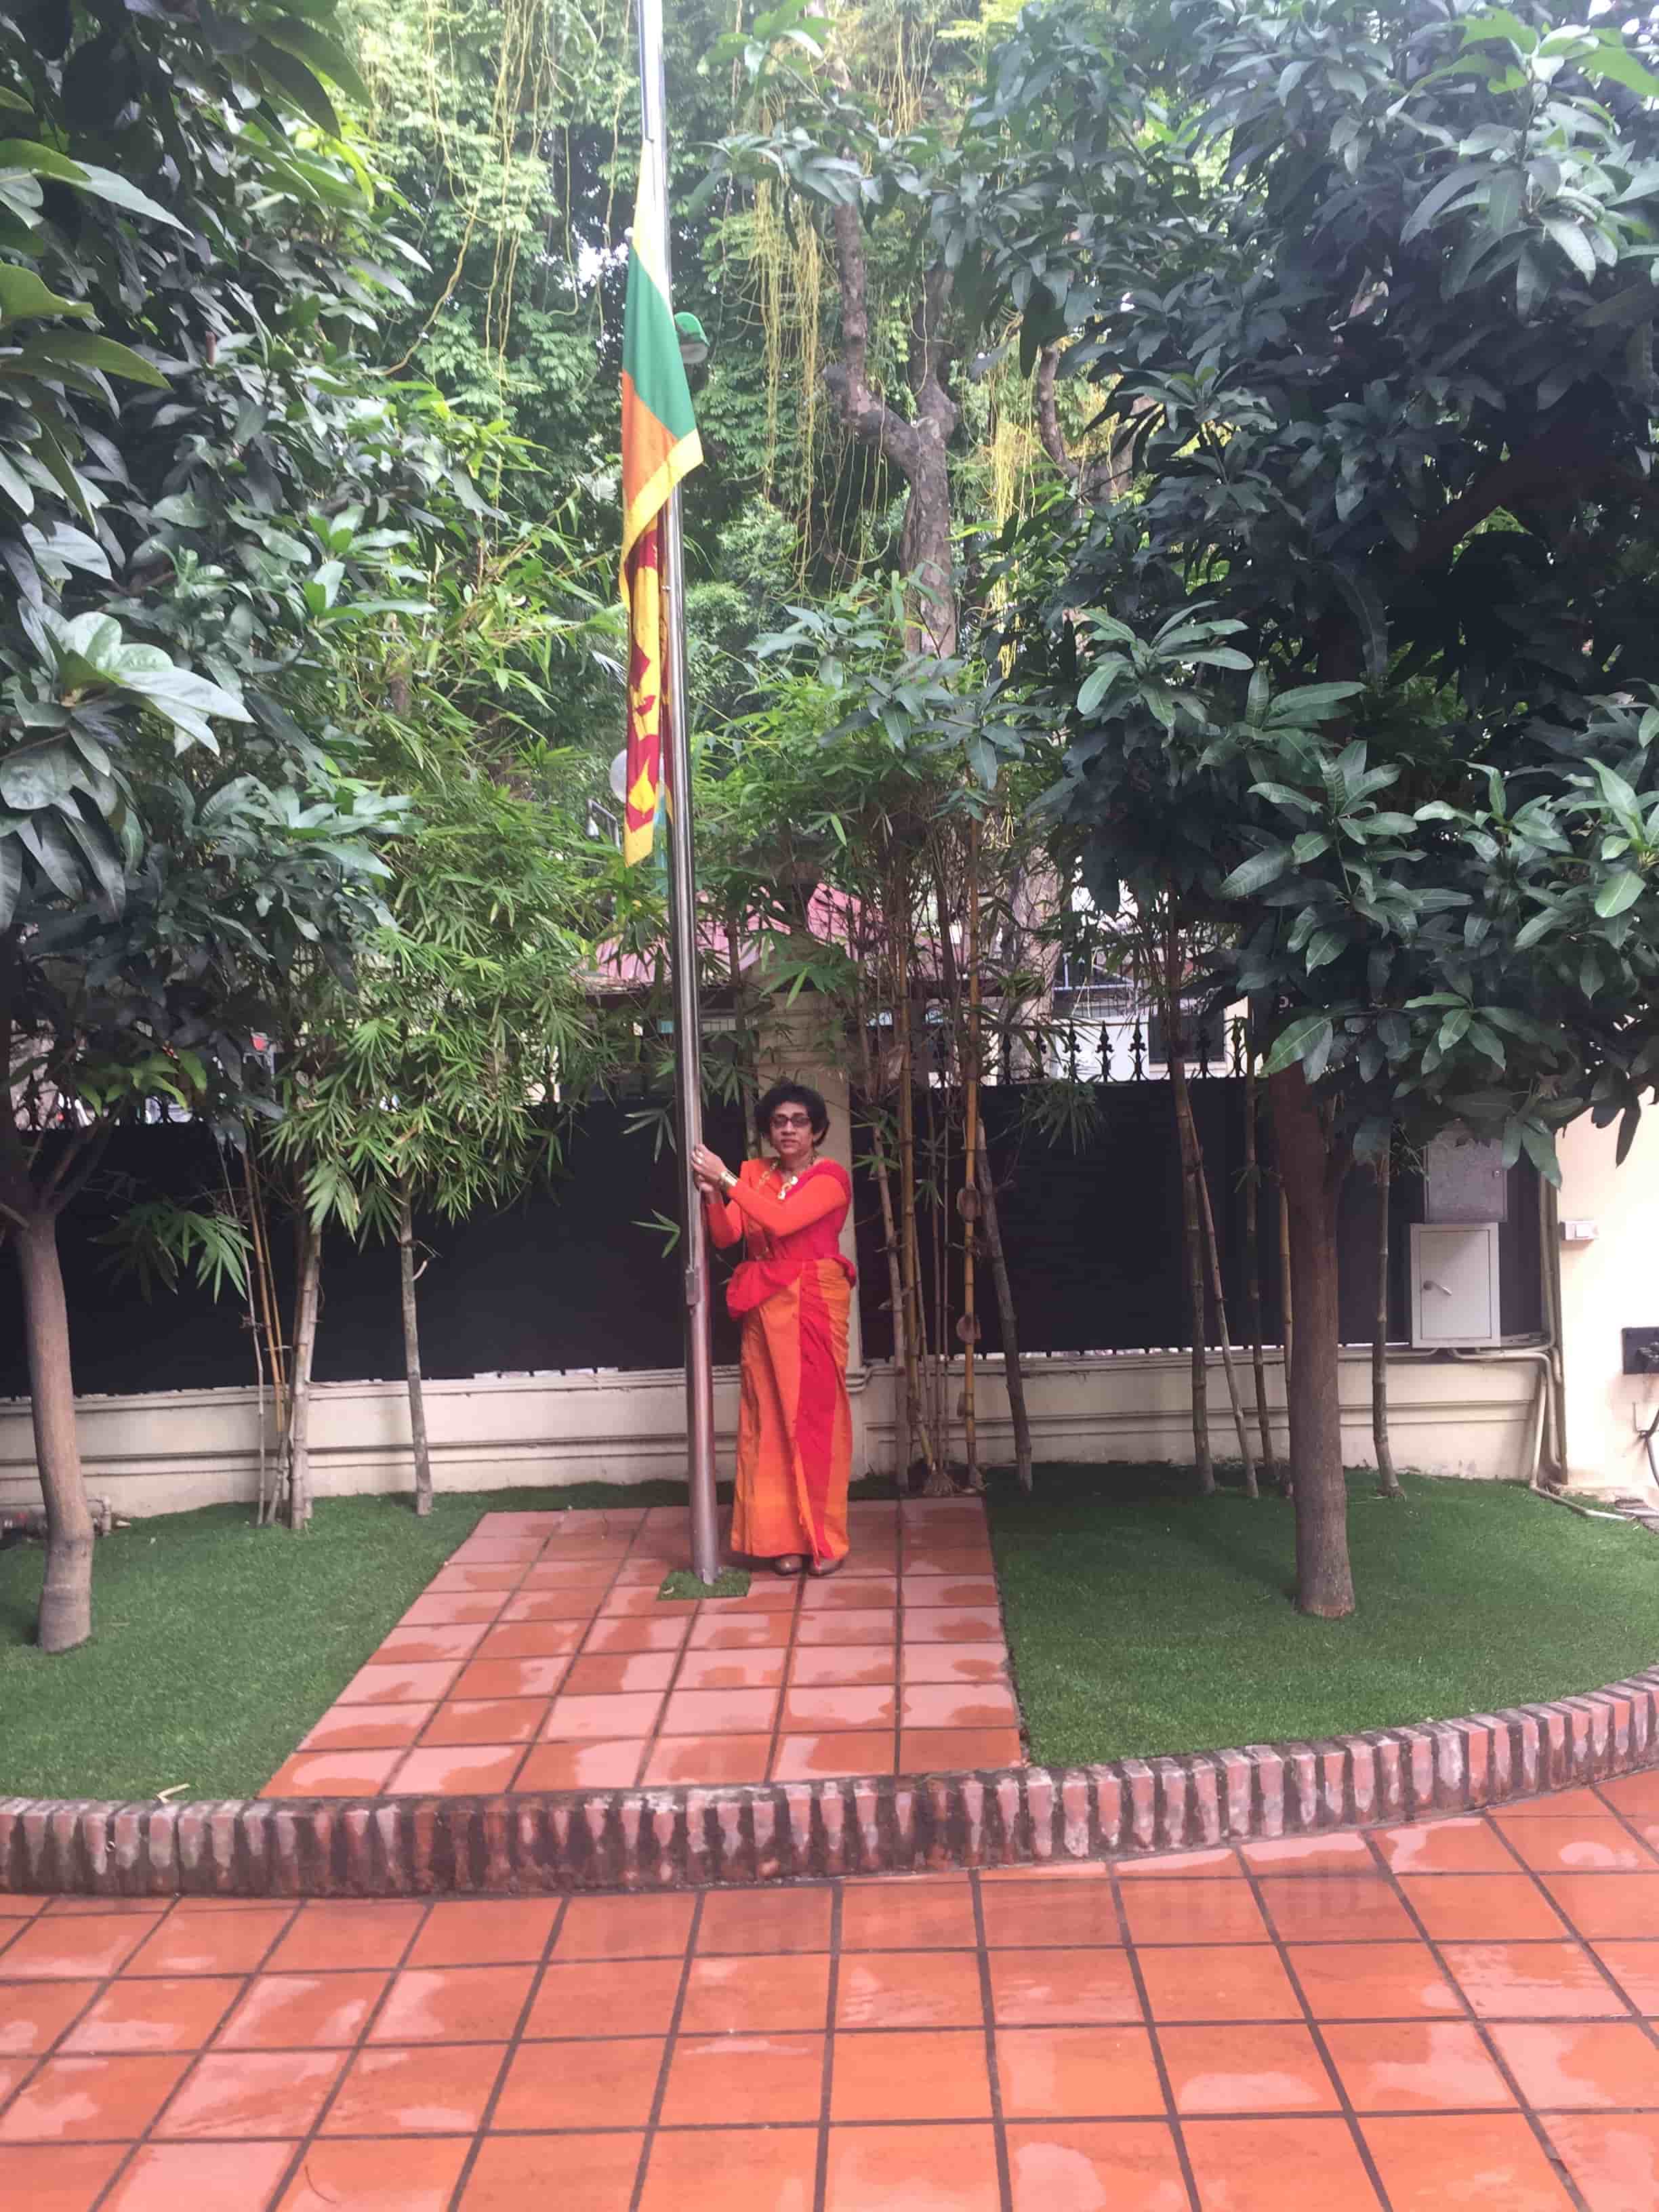 Image1- Hoisting the National flag by the Ambassador